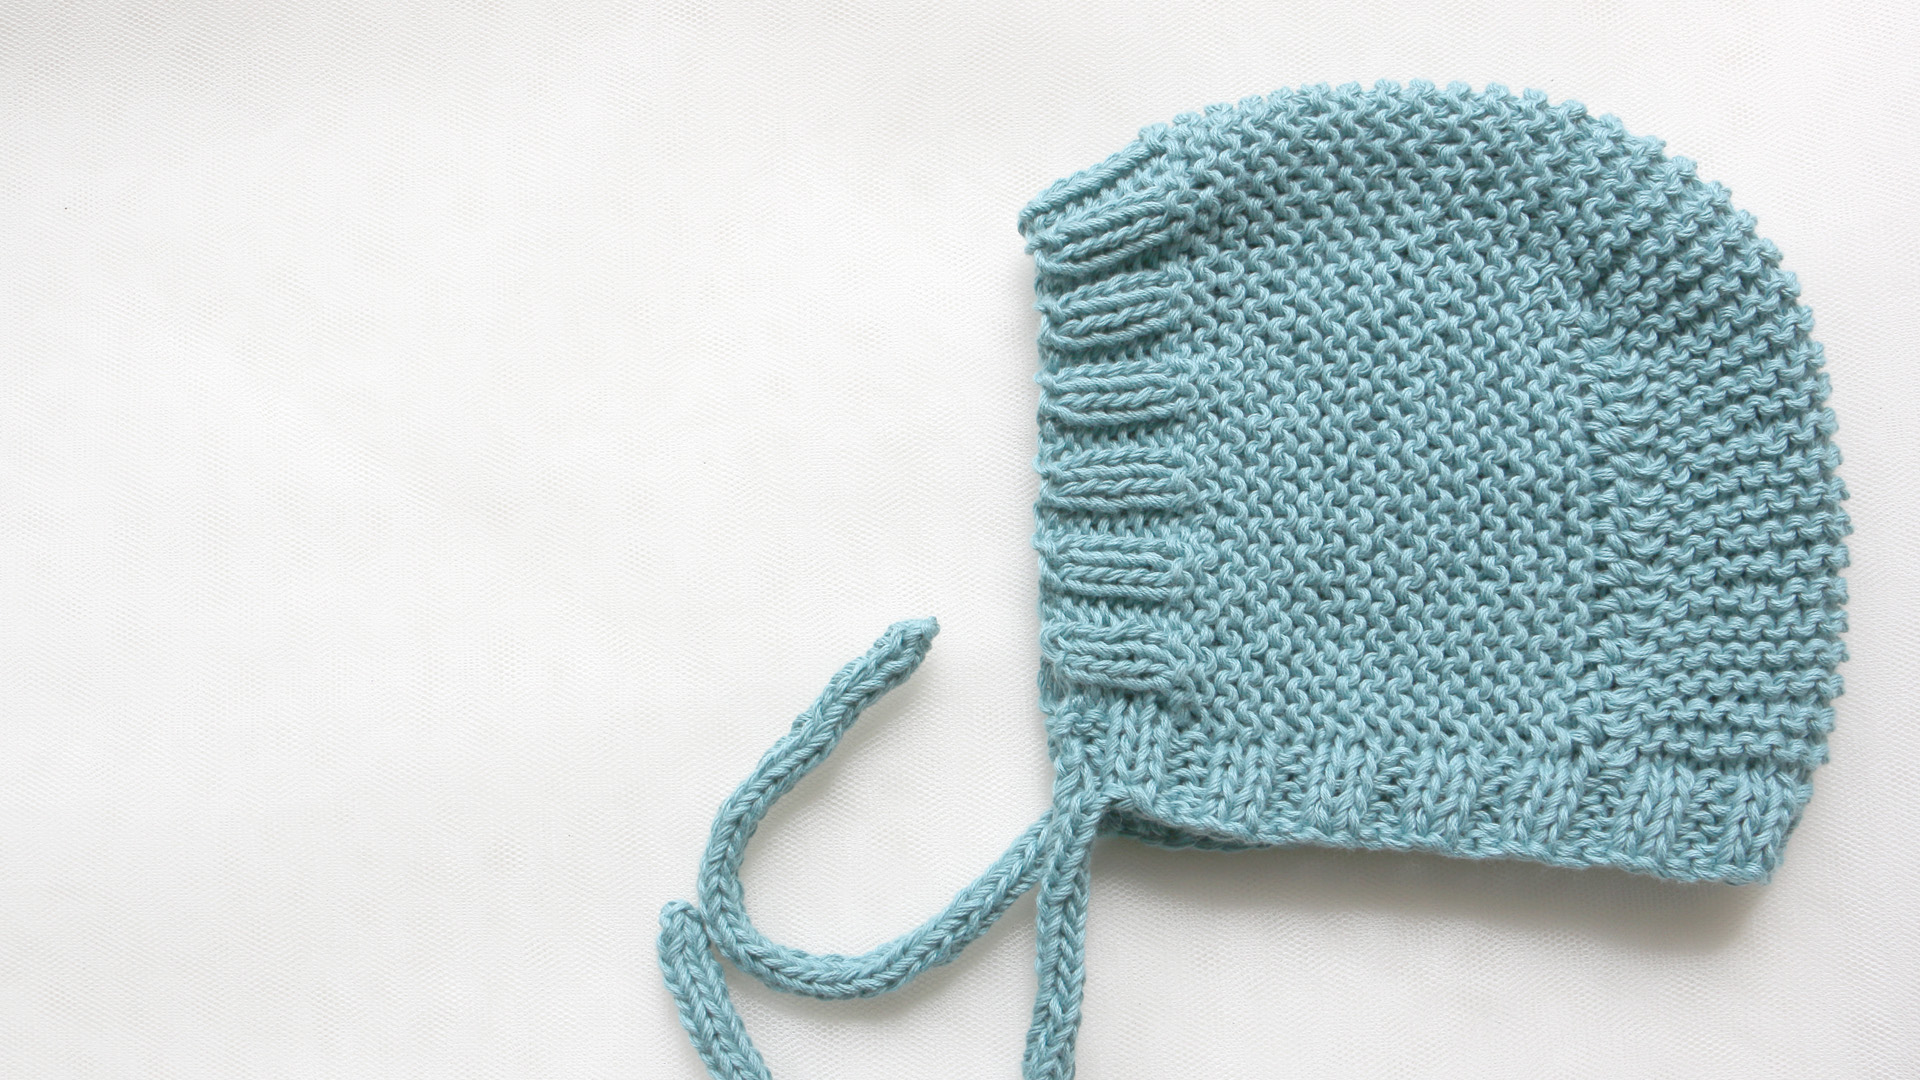 baby bonnet knitting pattern free